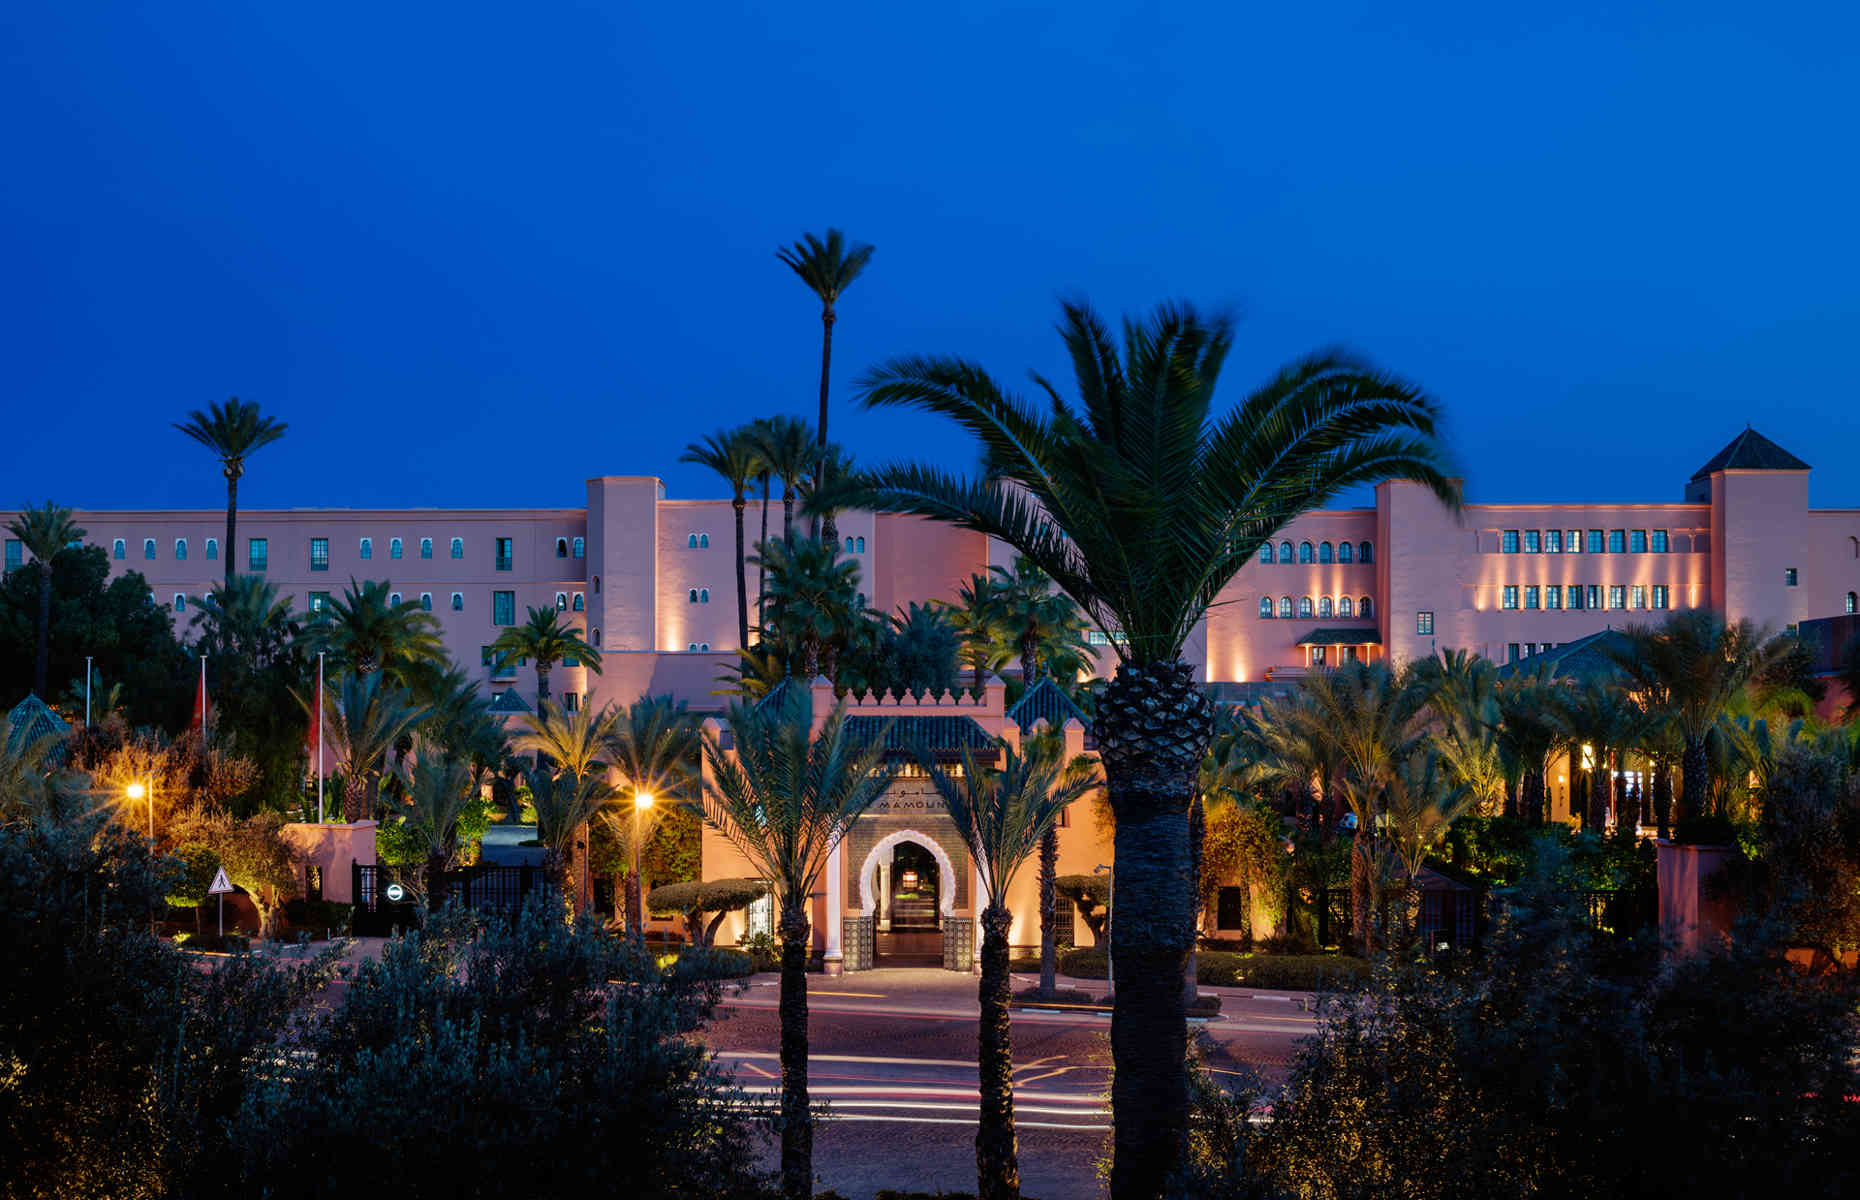 Façade La Mamounia - Hôtel Marrakech, Maroc